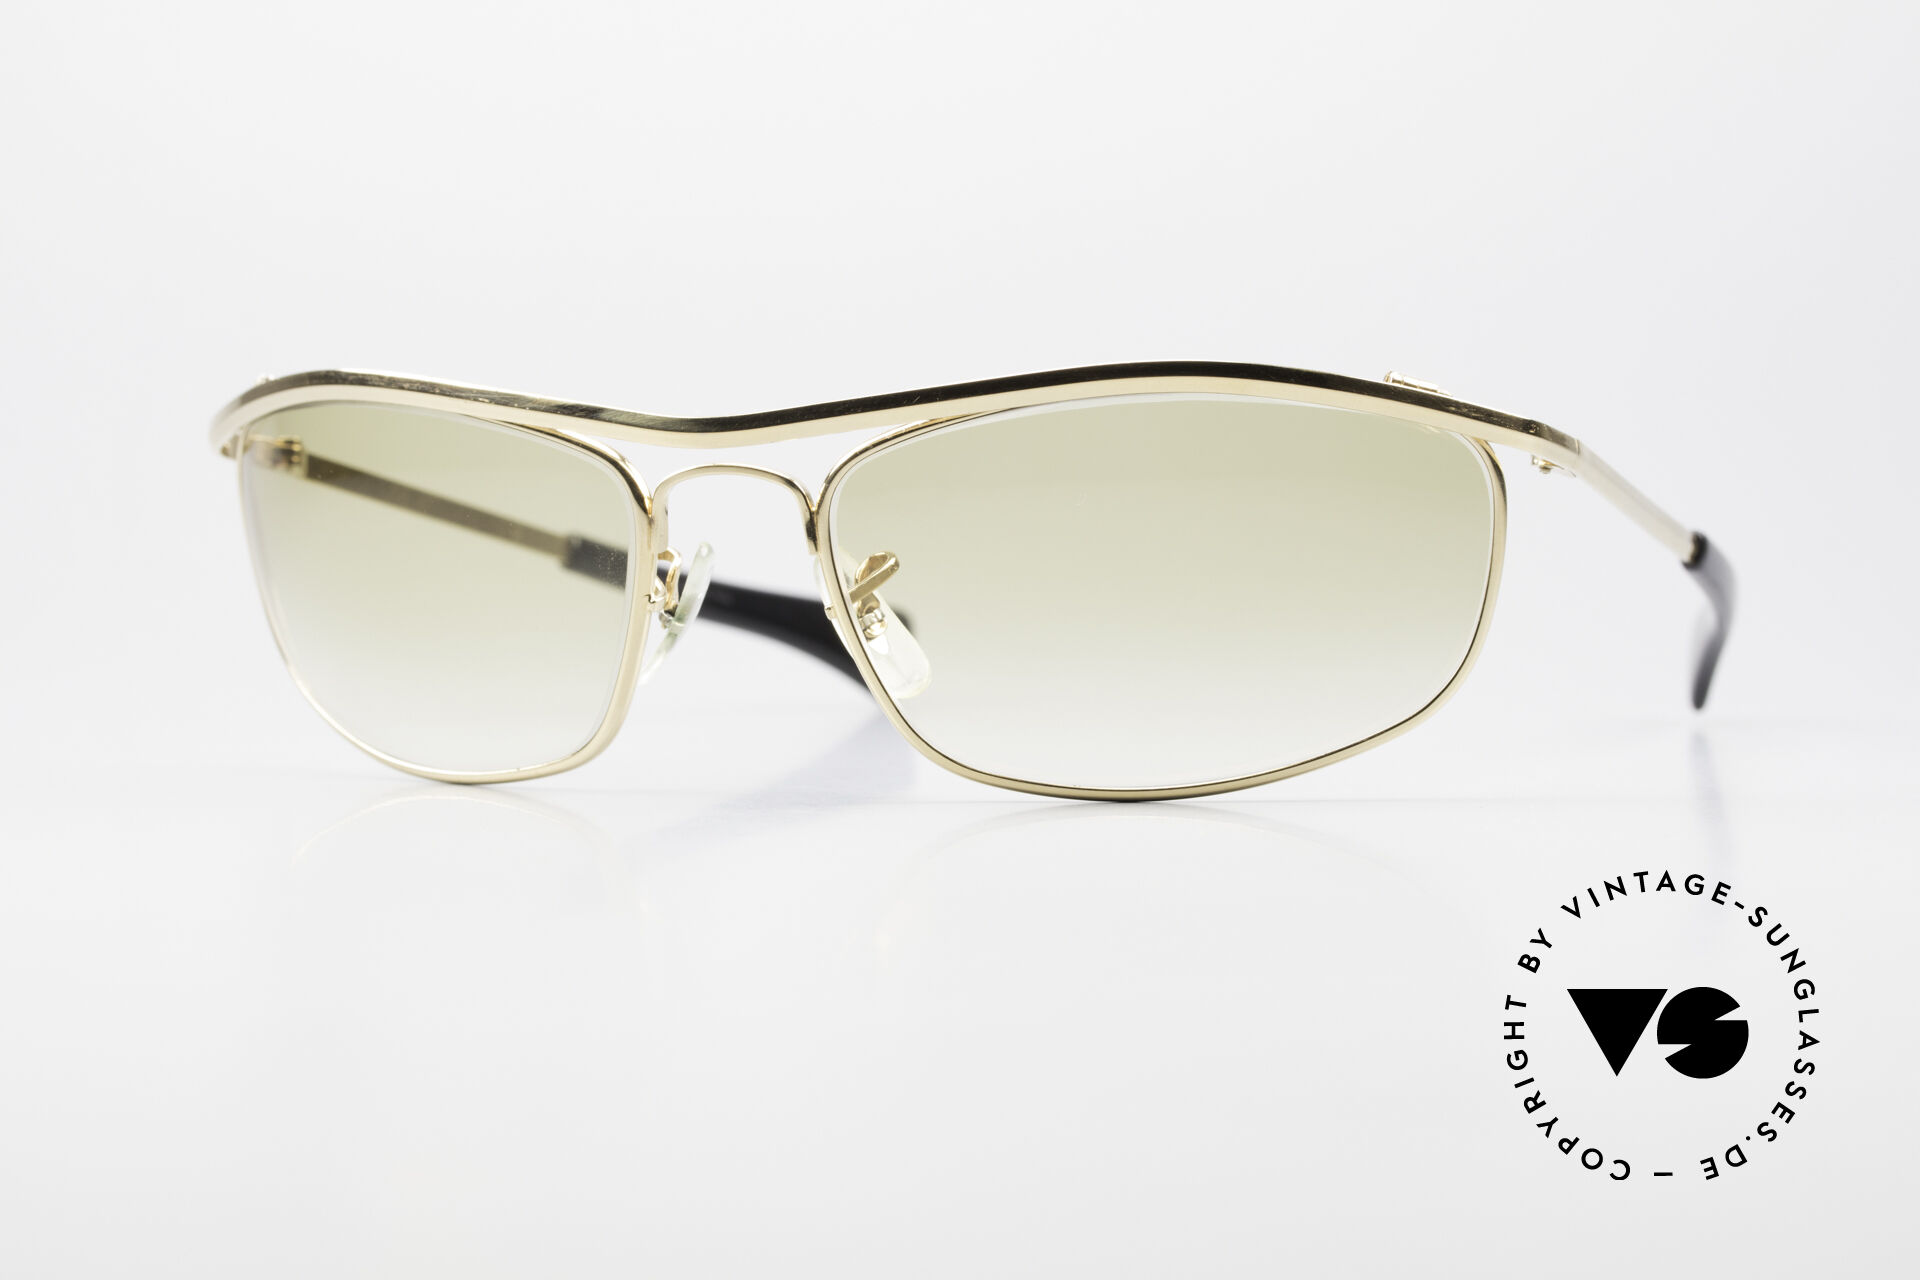 Fonda Easy Rider Metal Vintage Mens Sunglasses Tortoise/Gold Frame Brown Lens 